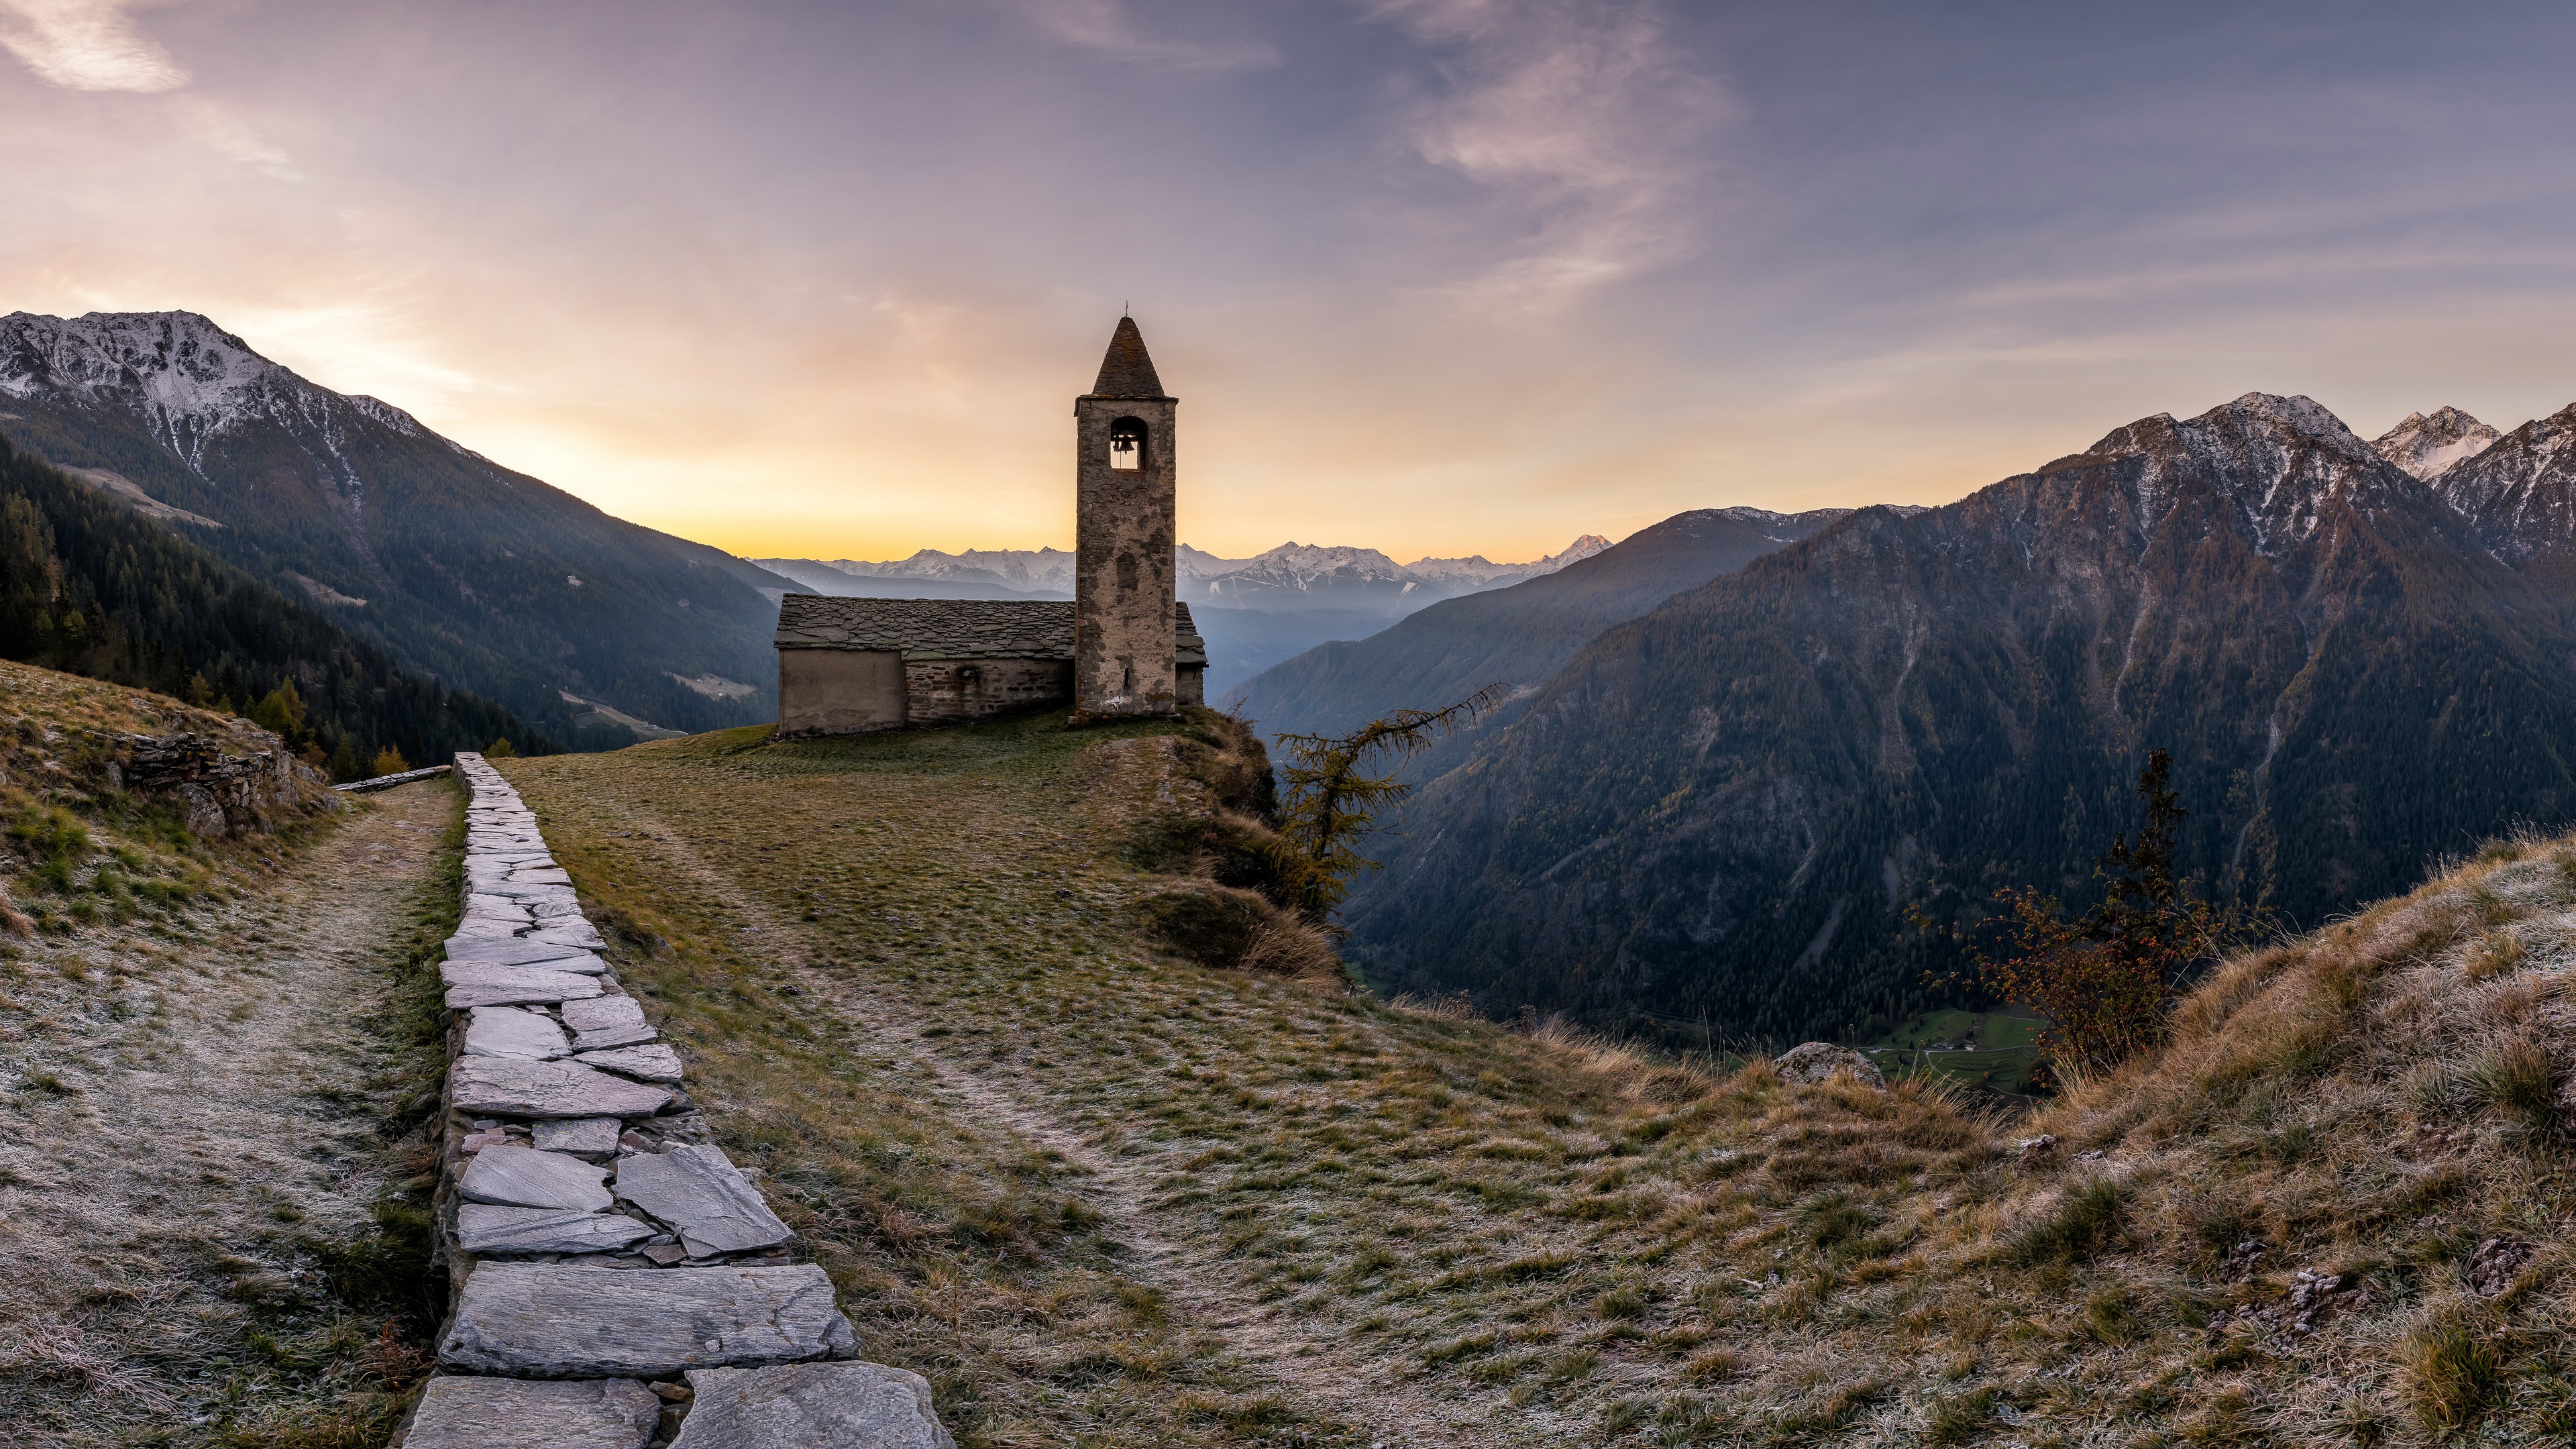 Descarga gratis la imagen Cielo, Montaña, Camino, Alpes, Suiza, Iglesia, Iglesias, Religioso en el escritorio de tu PC